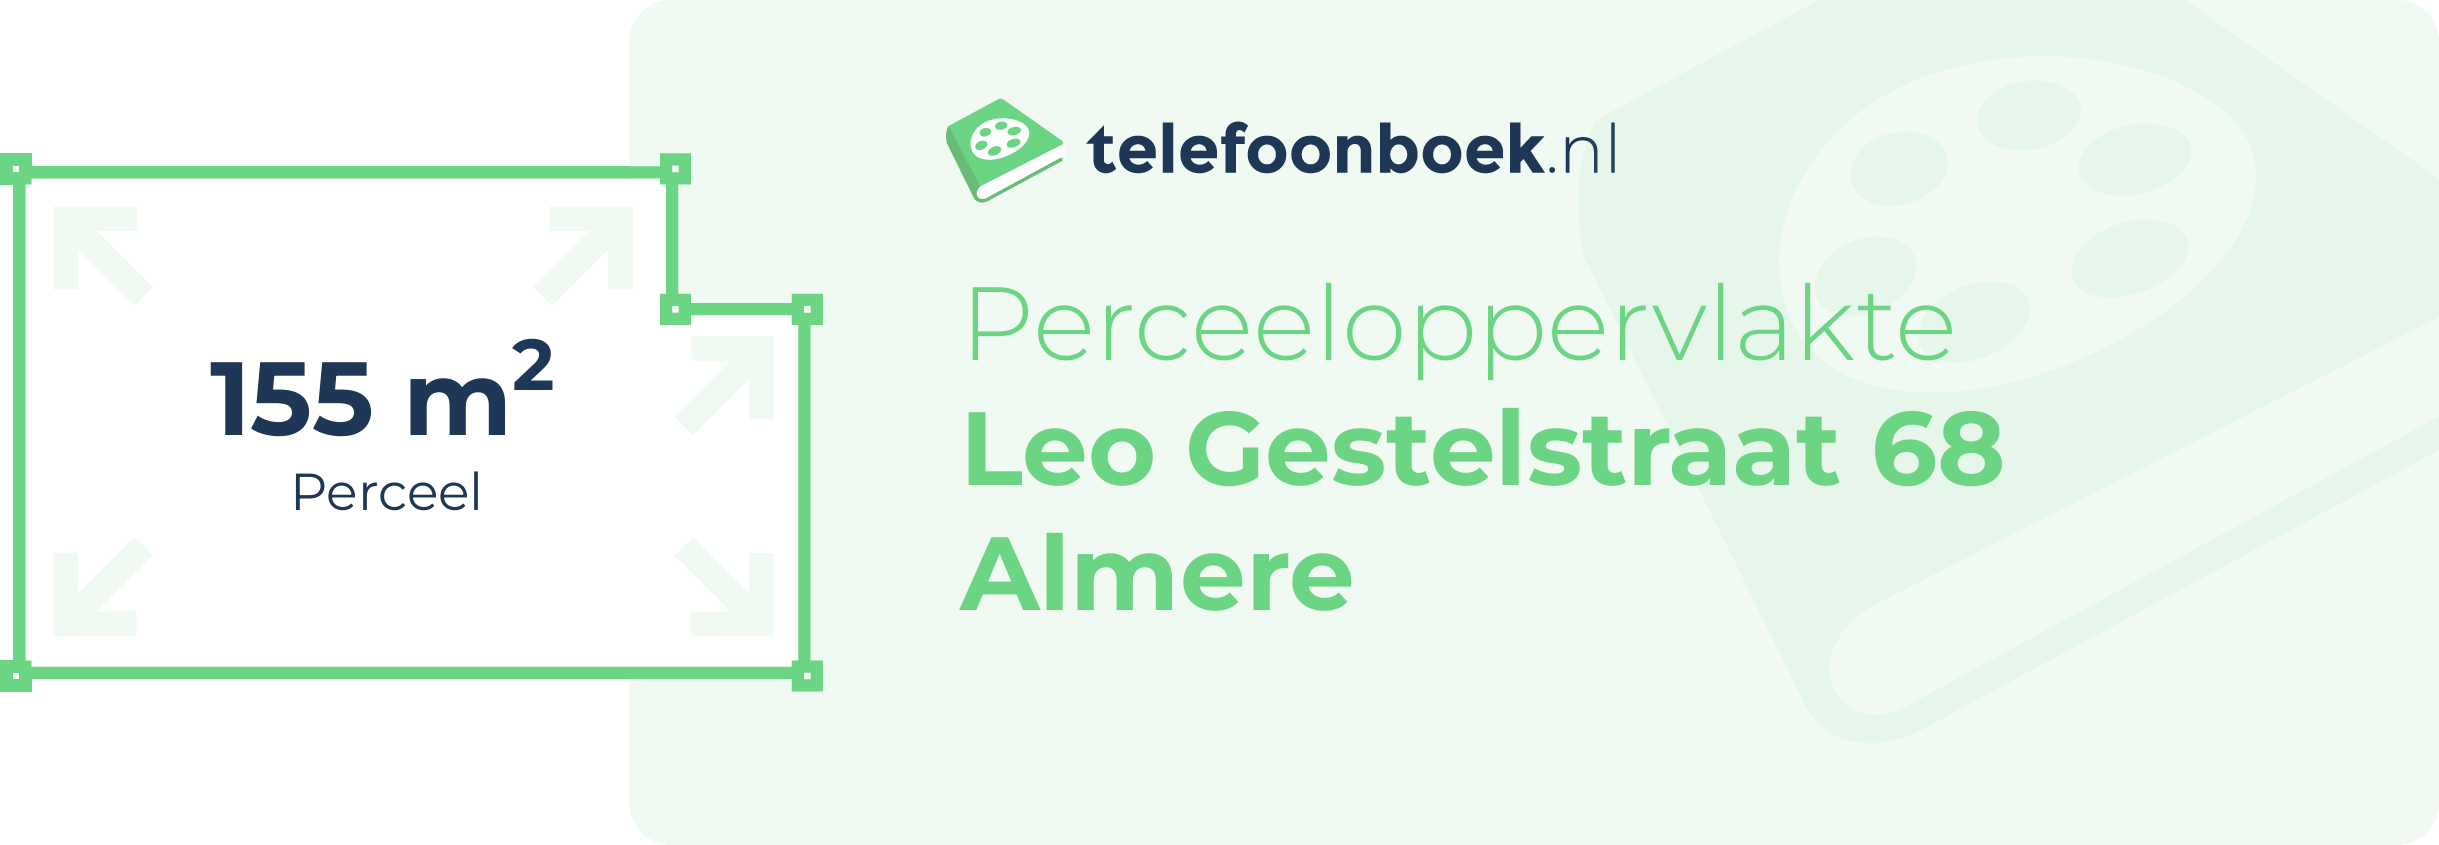 Perceeloppervlakte Leo Gestelstraat 68 Almere